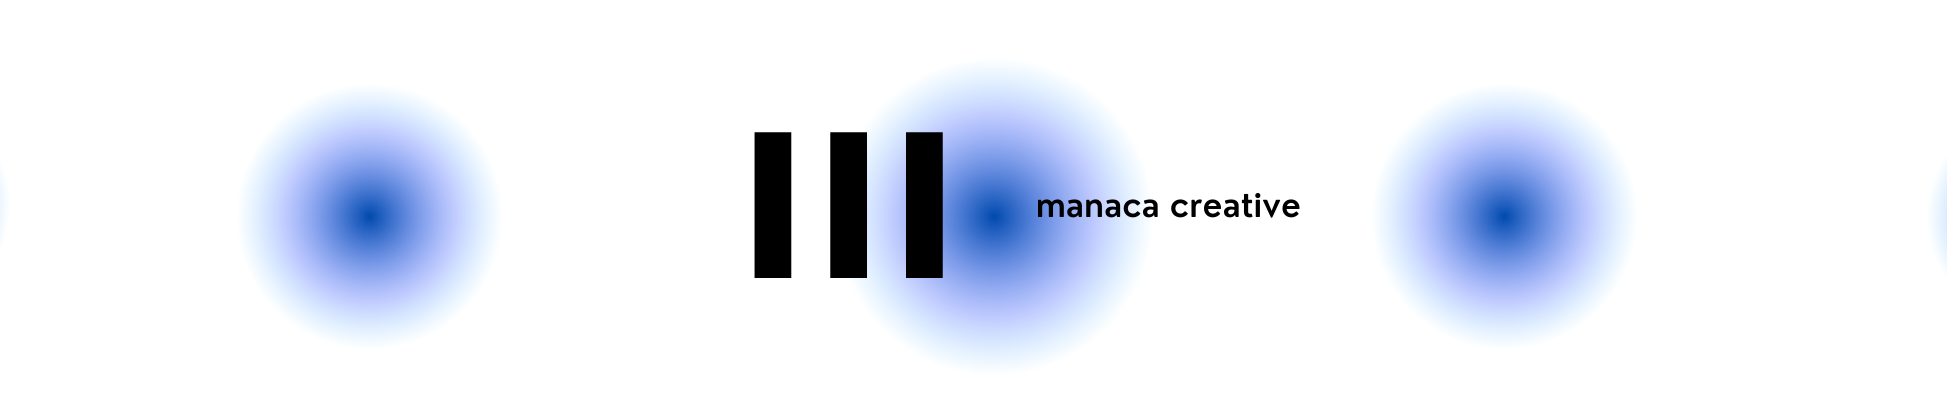 manaca creative's profile banner